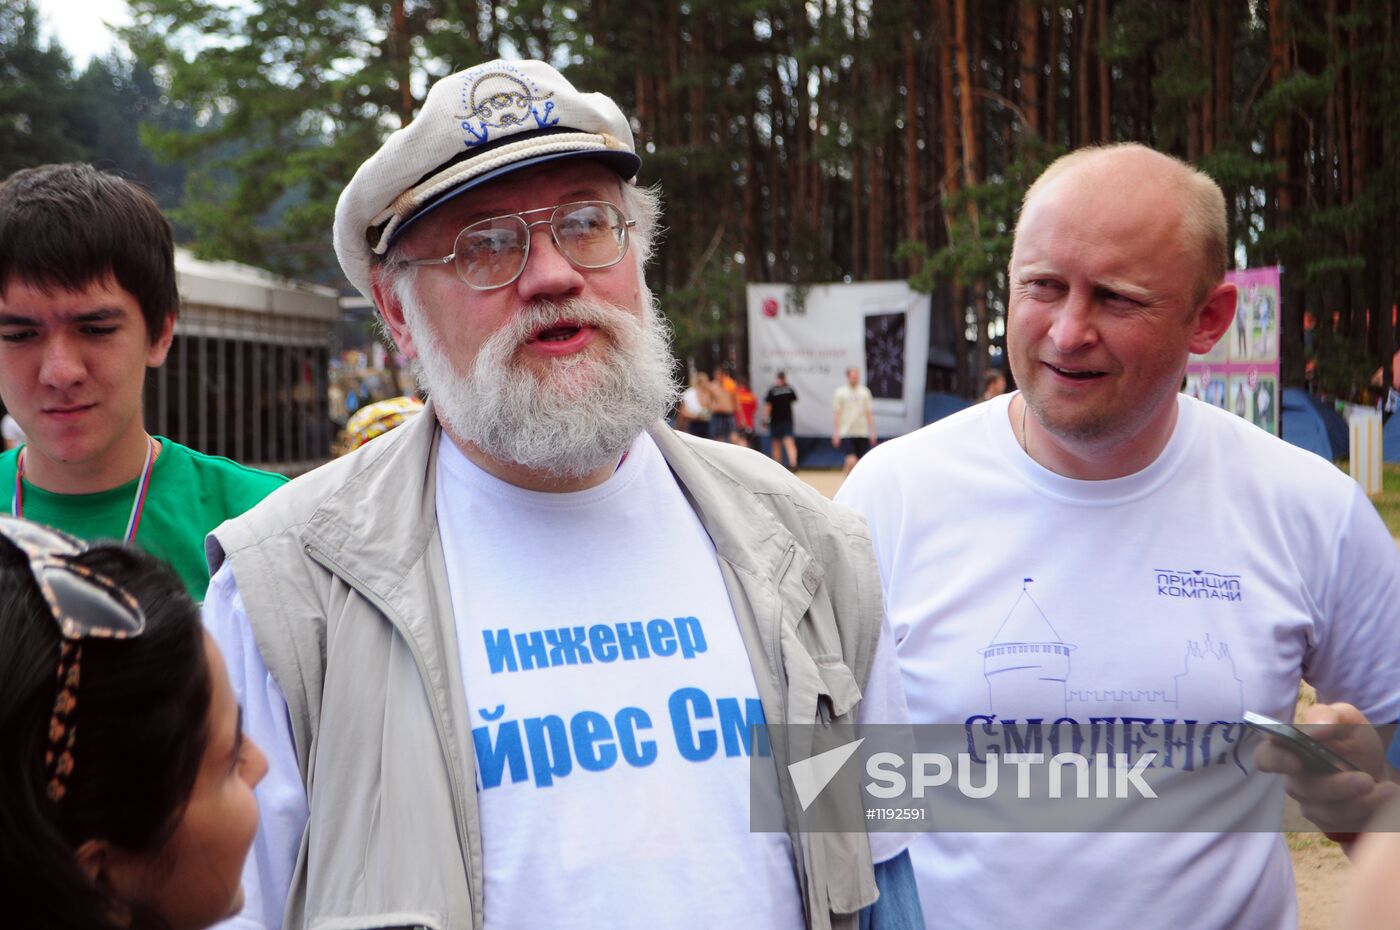 Vladimir Churov flew to "Seliger-2012" forum in a balloon